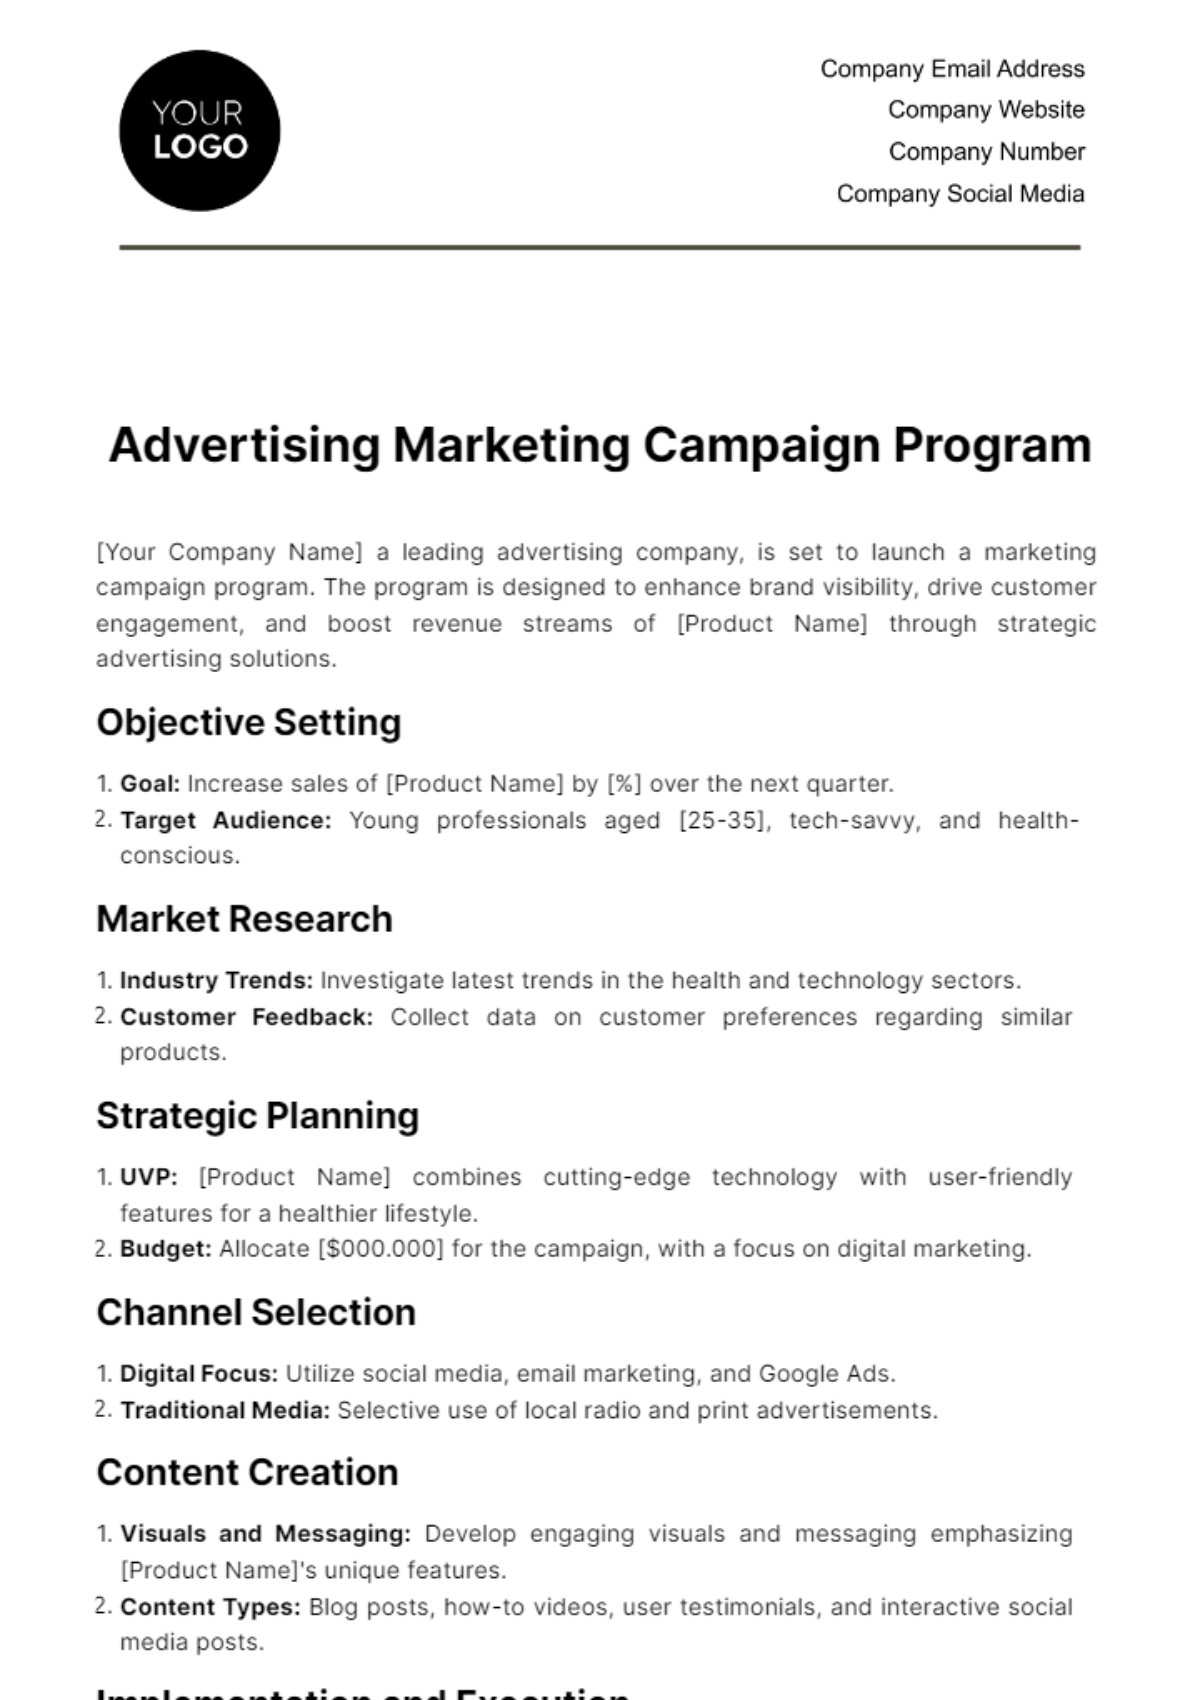 Free Advertising Marketing Campaign Program Template